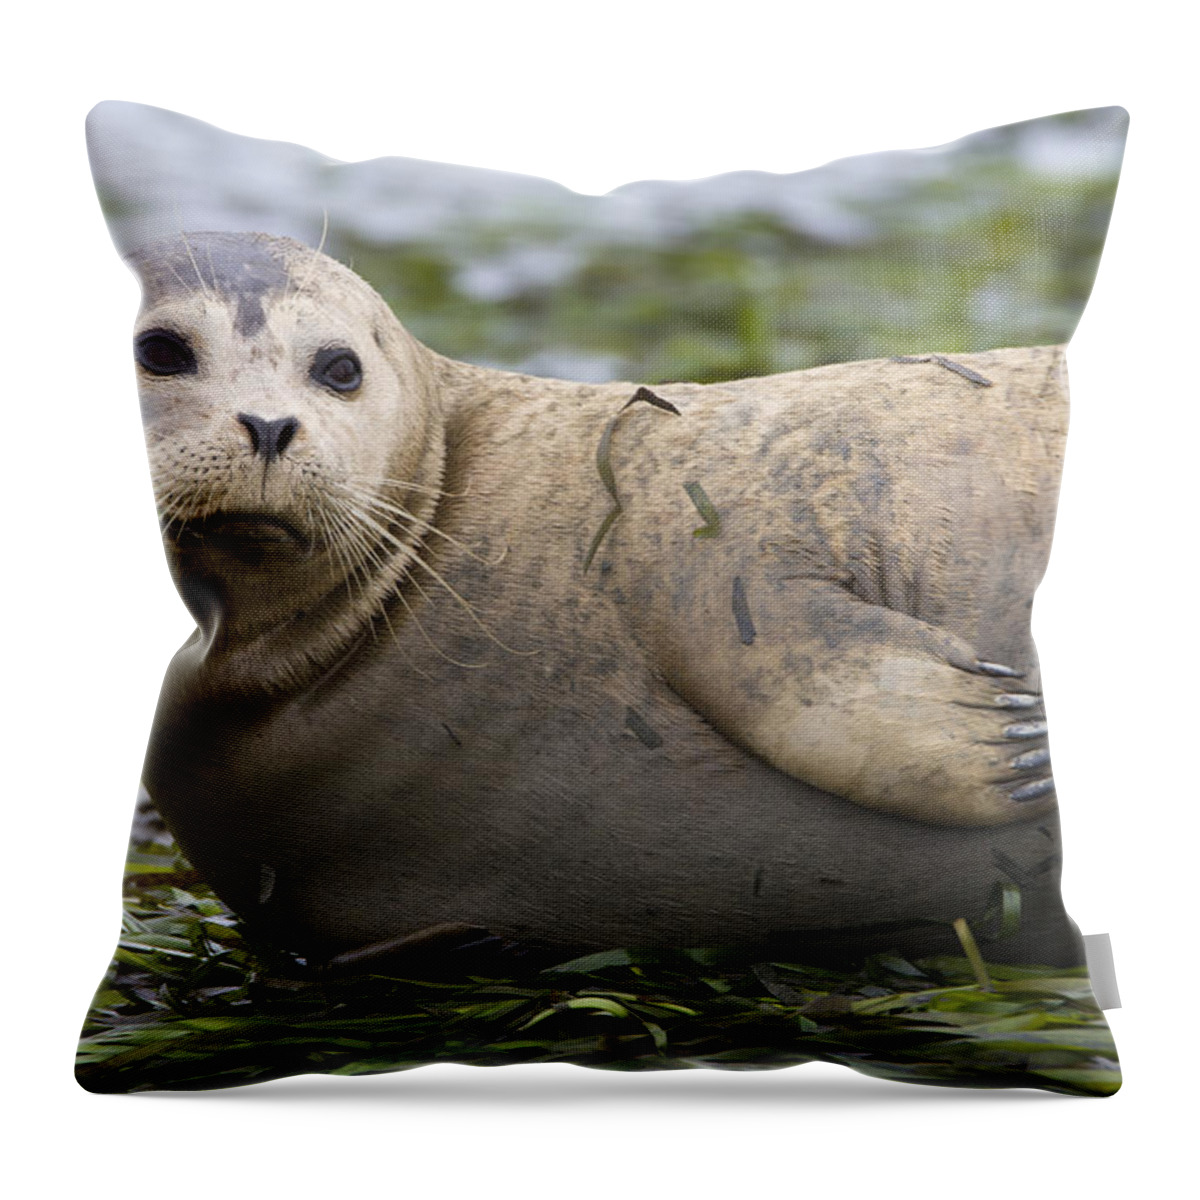 00450751 Throw Pillow featuring the photograph Harbor Seal Monterey Bay California by Suzi Eszterhas